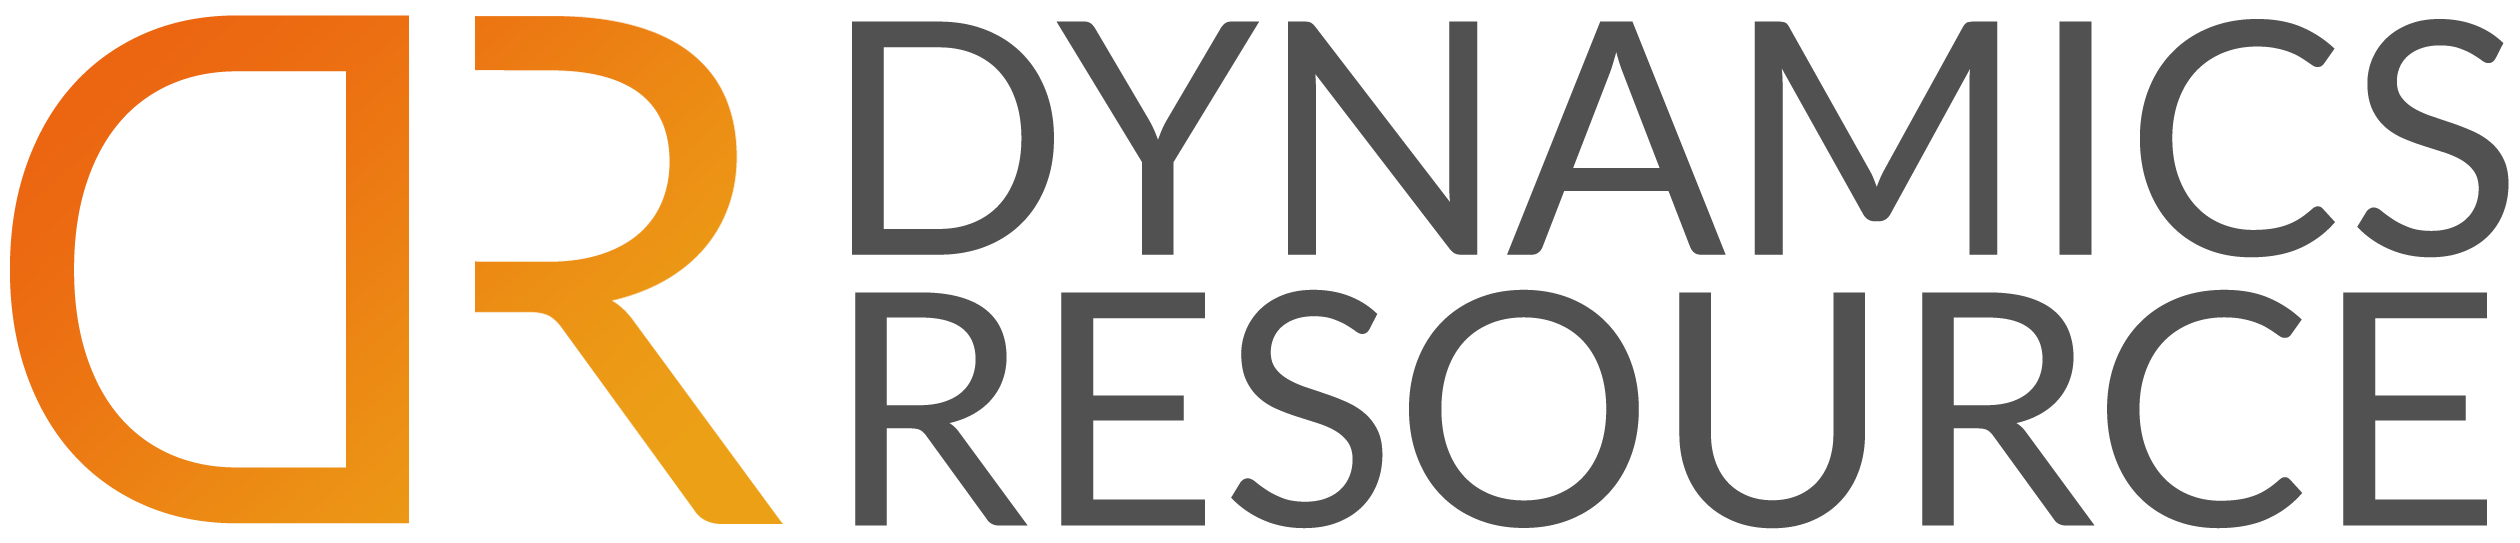 Dynamics resource logo